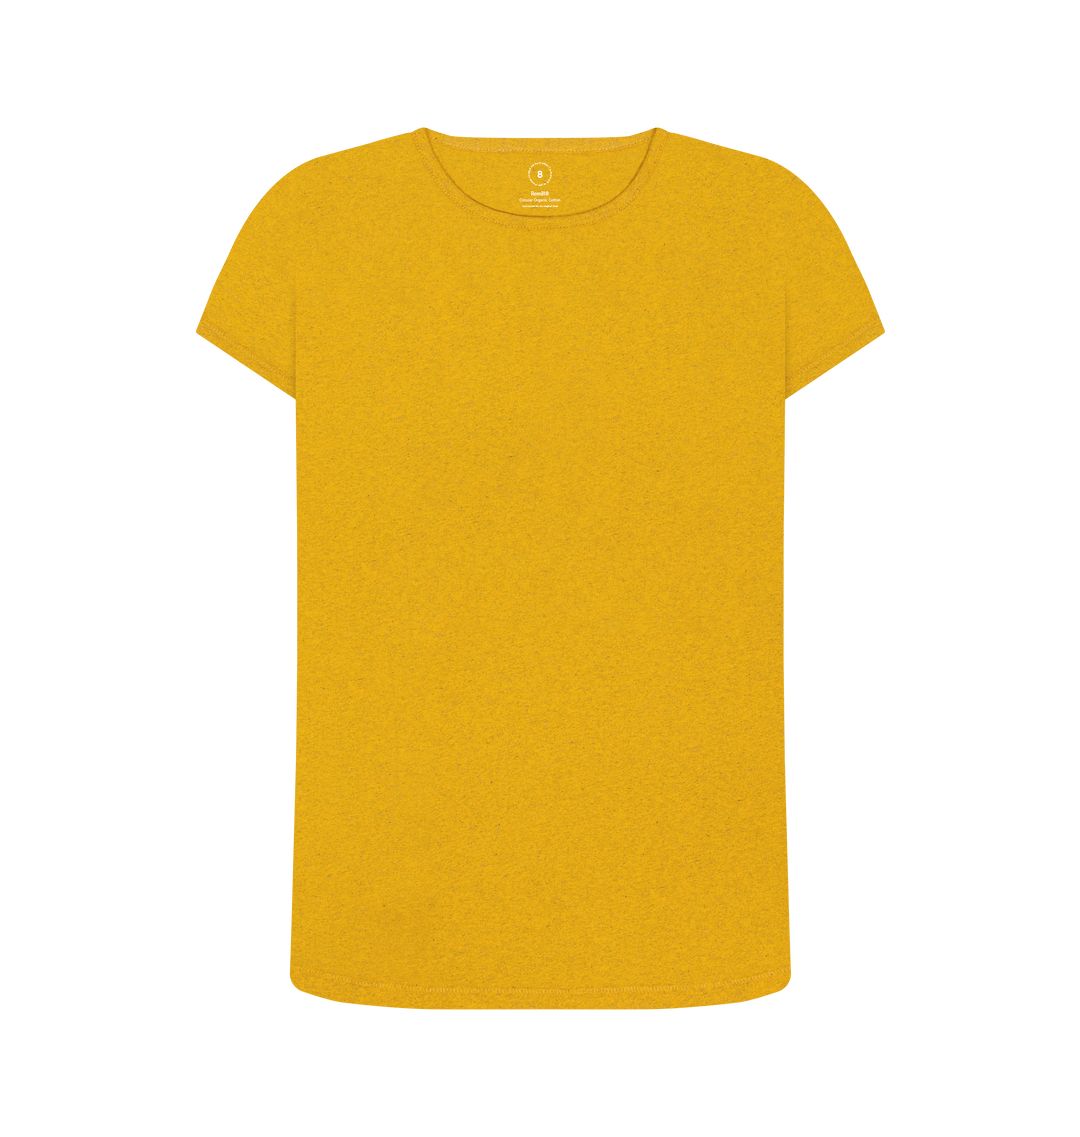 Sunflower Yellow Women's sustainable essential t-shirt